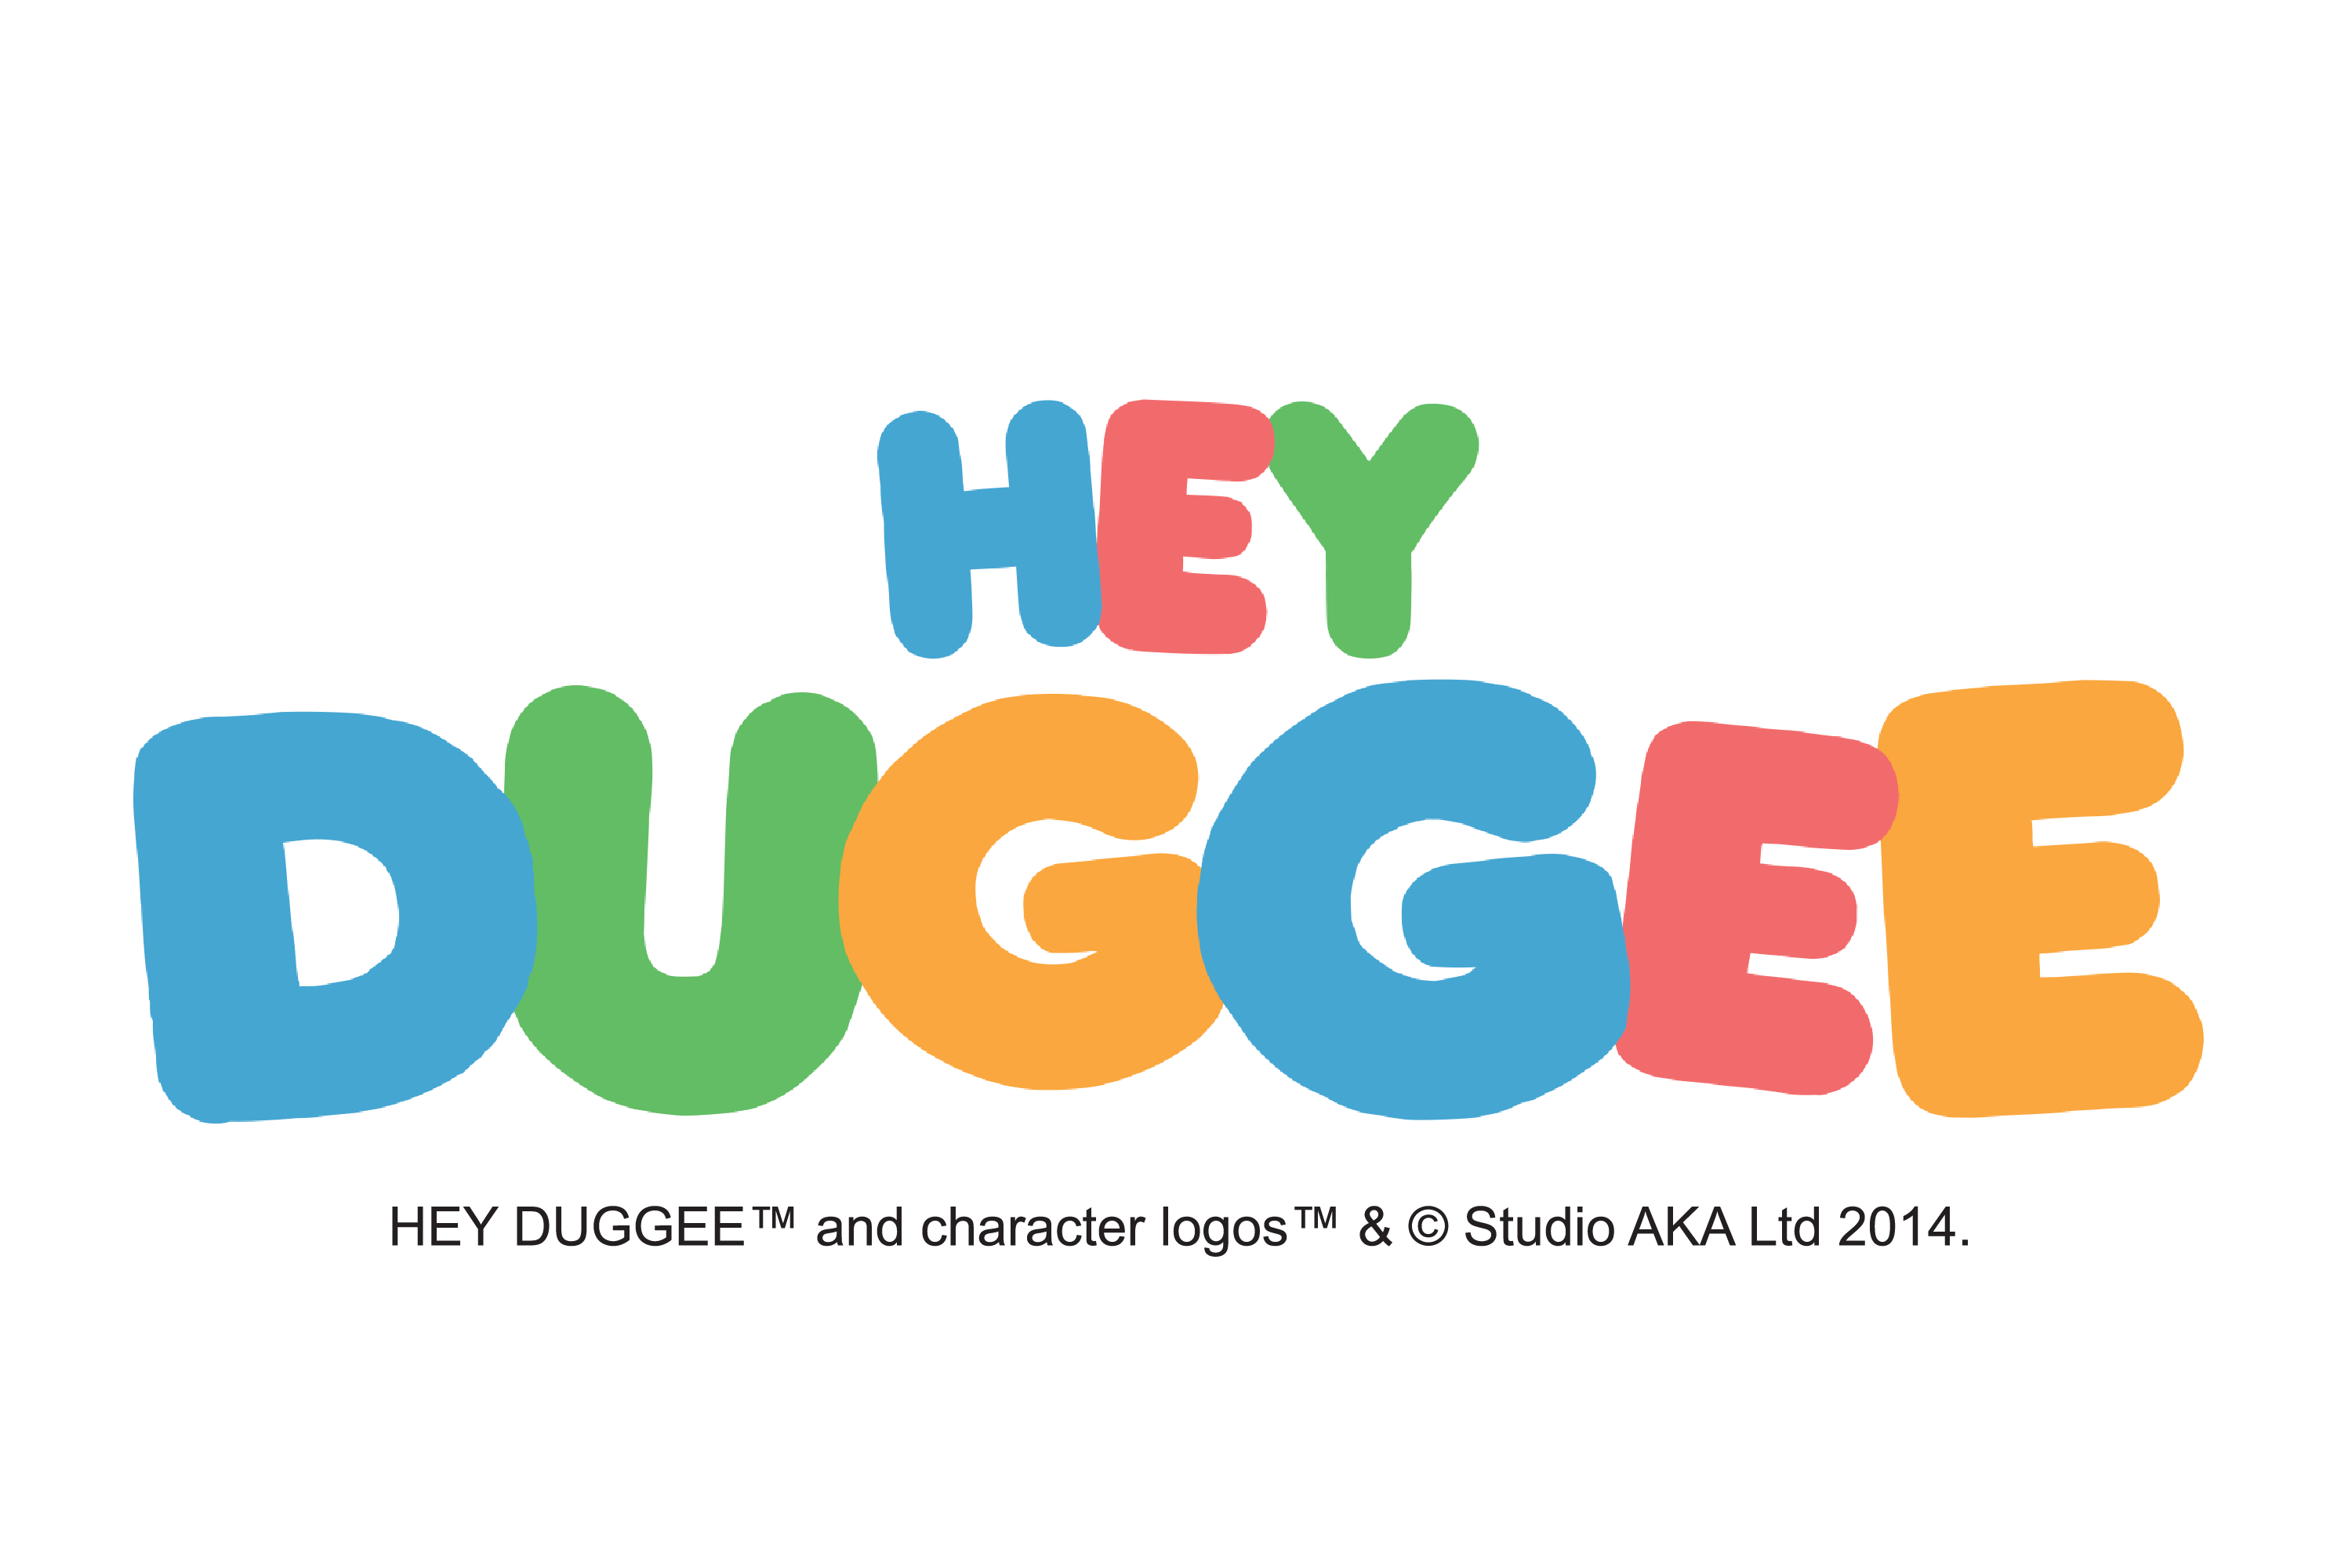 Hey Duggee logo.